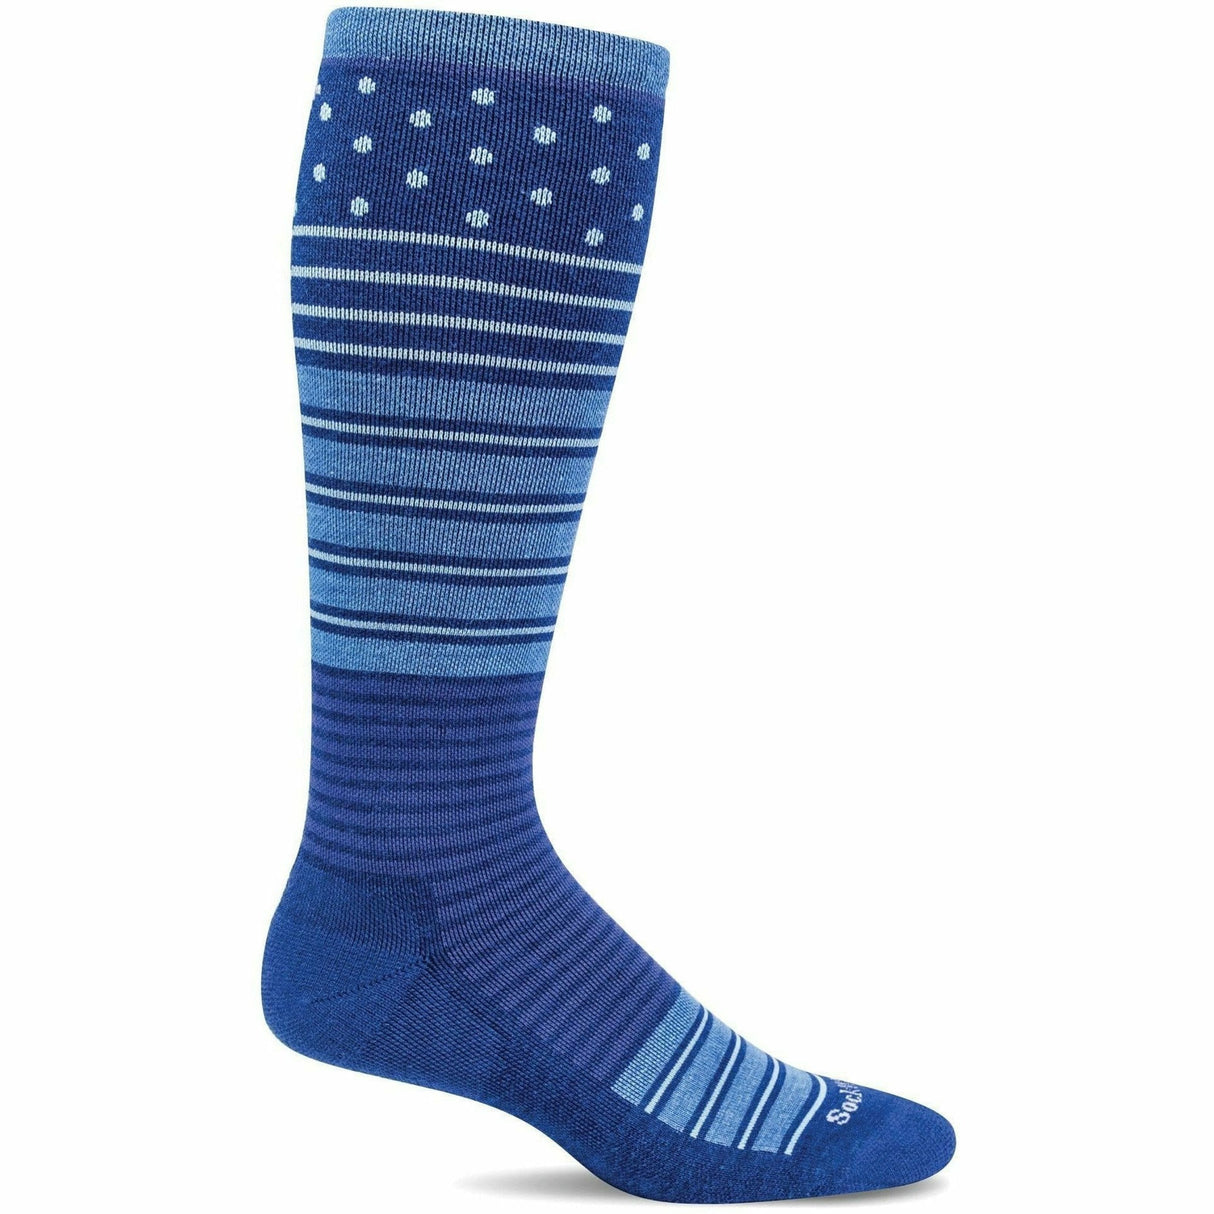 Sockwell Womens Twister Firm Compression Knee High Socks  -  Small/Medium / Ink